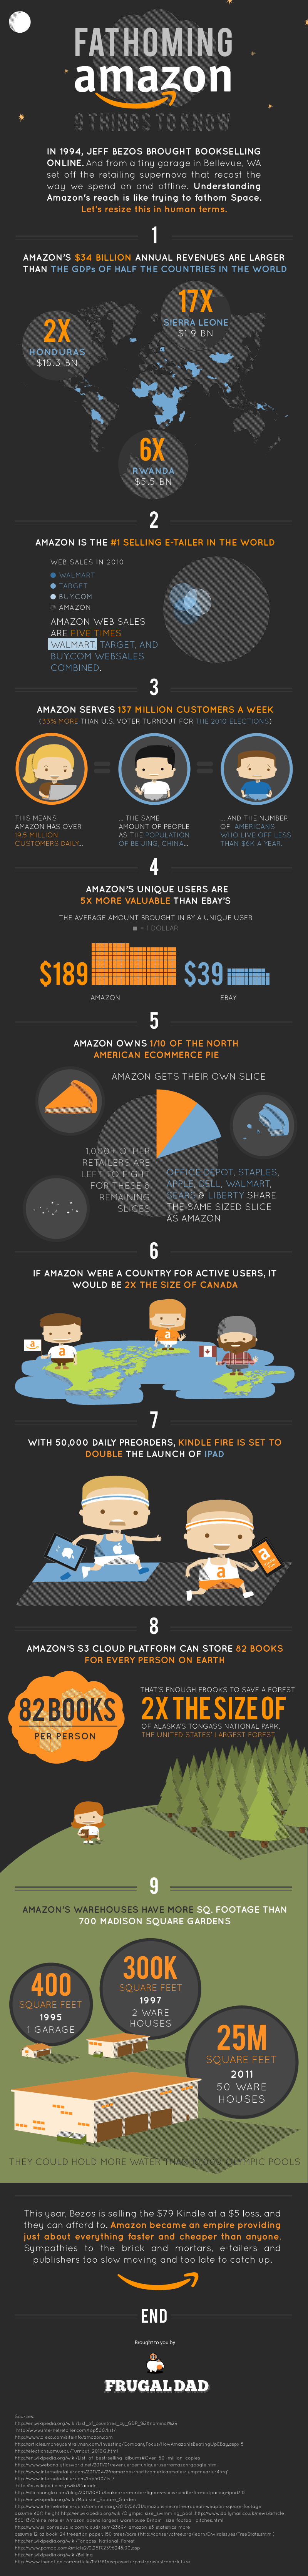 Amazon em números